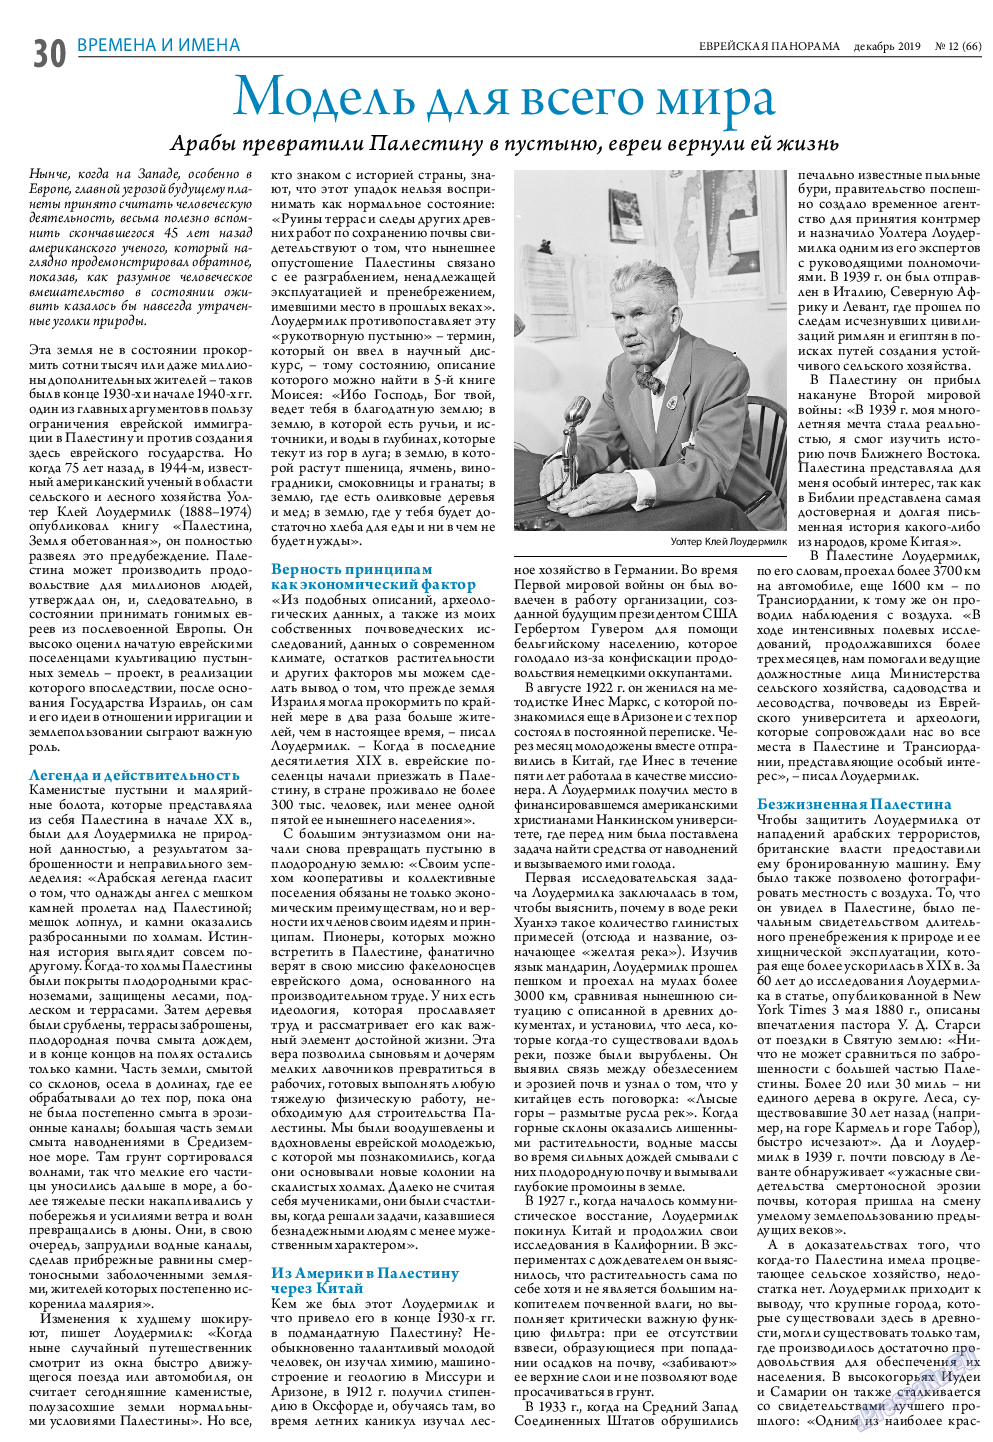 Еврейская панорама, газета. 2019 №12 стр.30